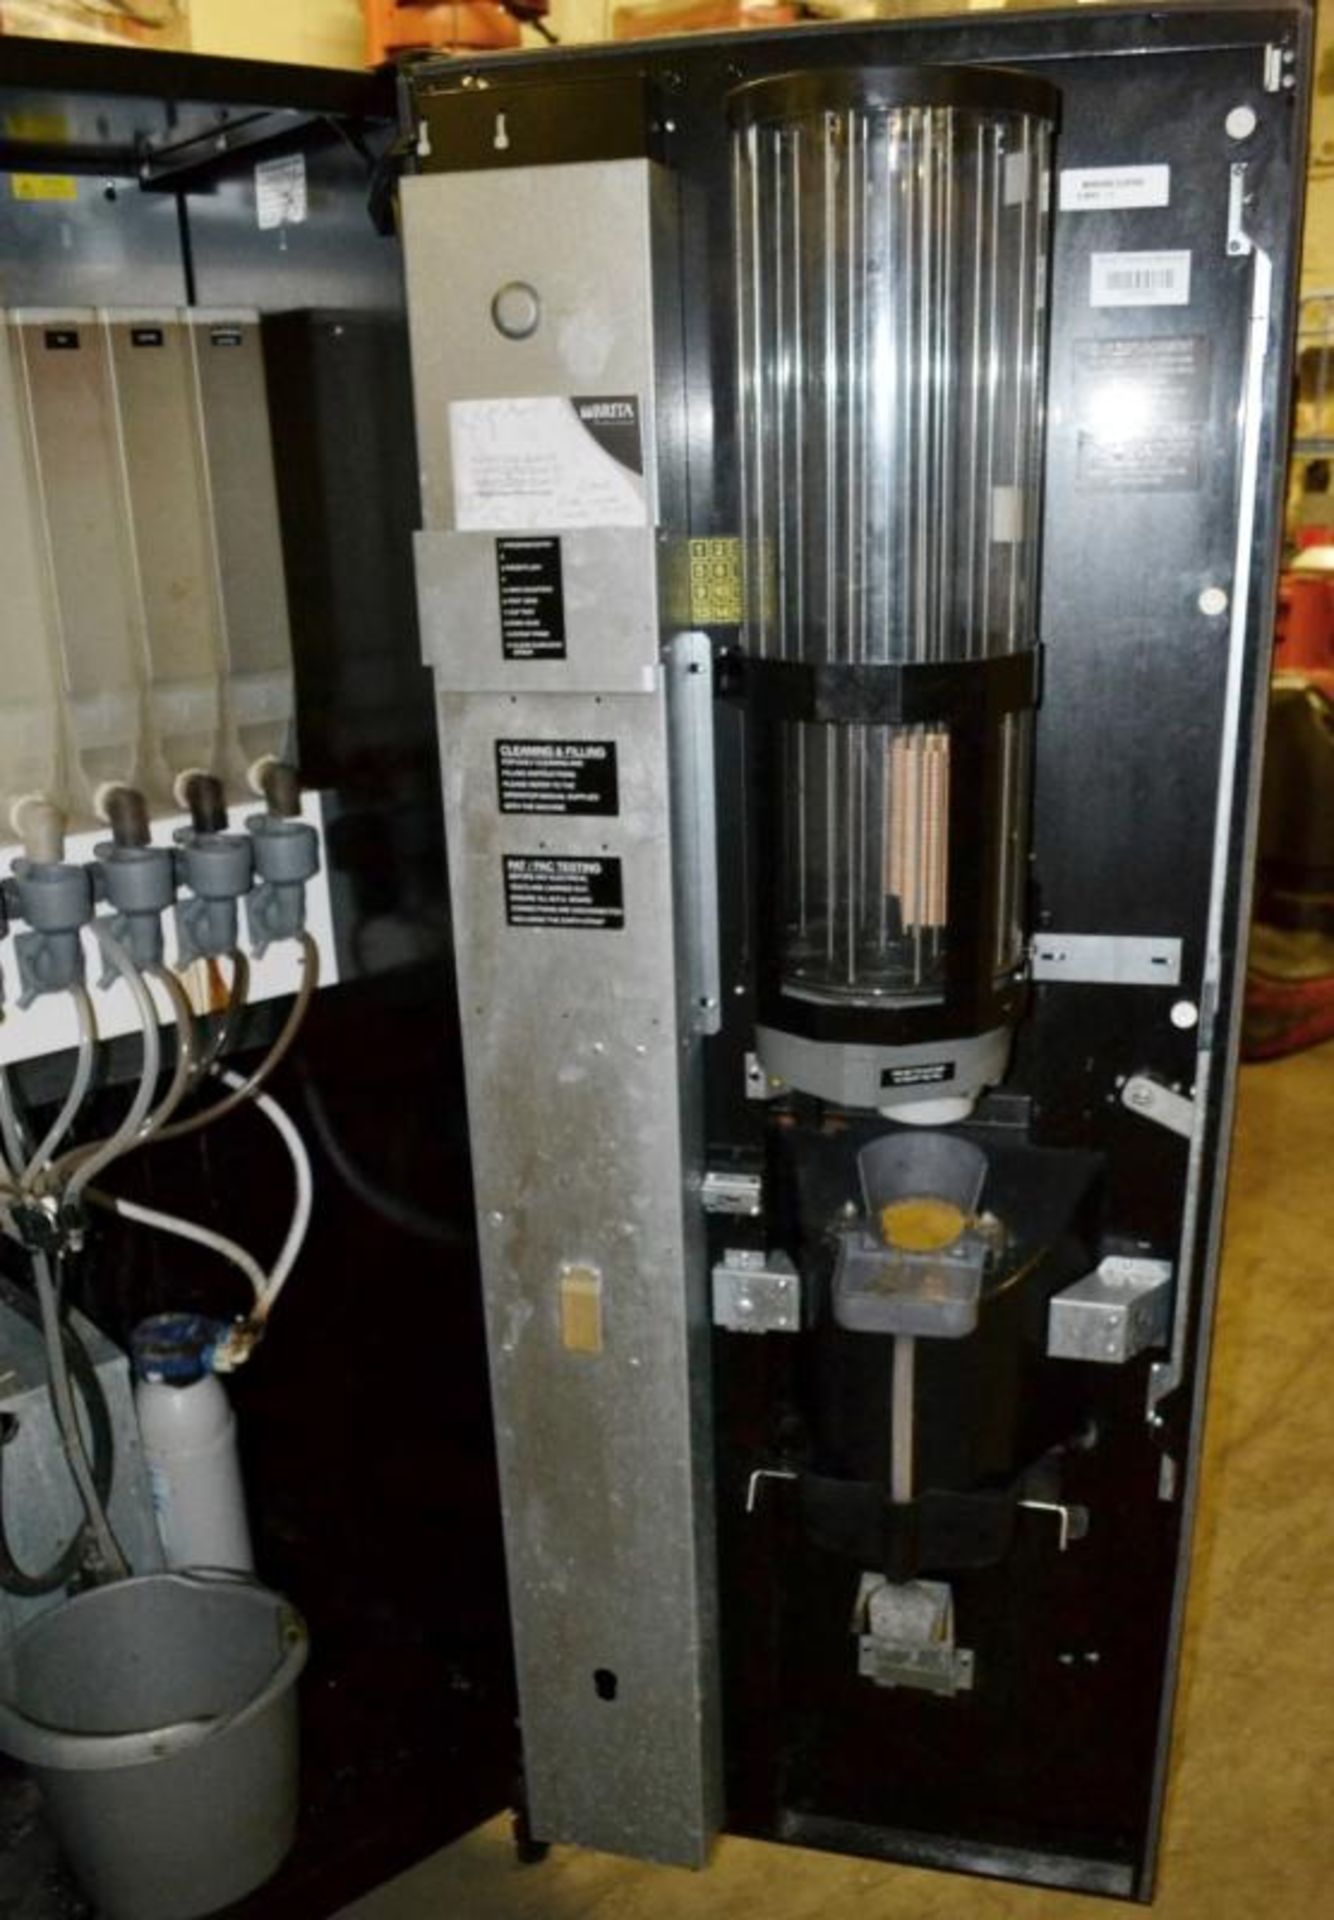 1 x Crane "Evolution" Hot Beverage Drinks Vending Machine With Keys - Year: 2009 - Recently Taken - Image 2 of 14